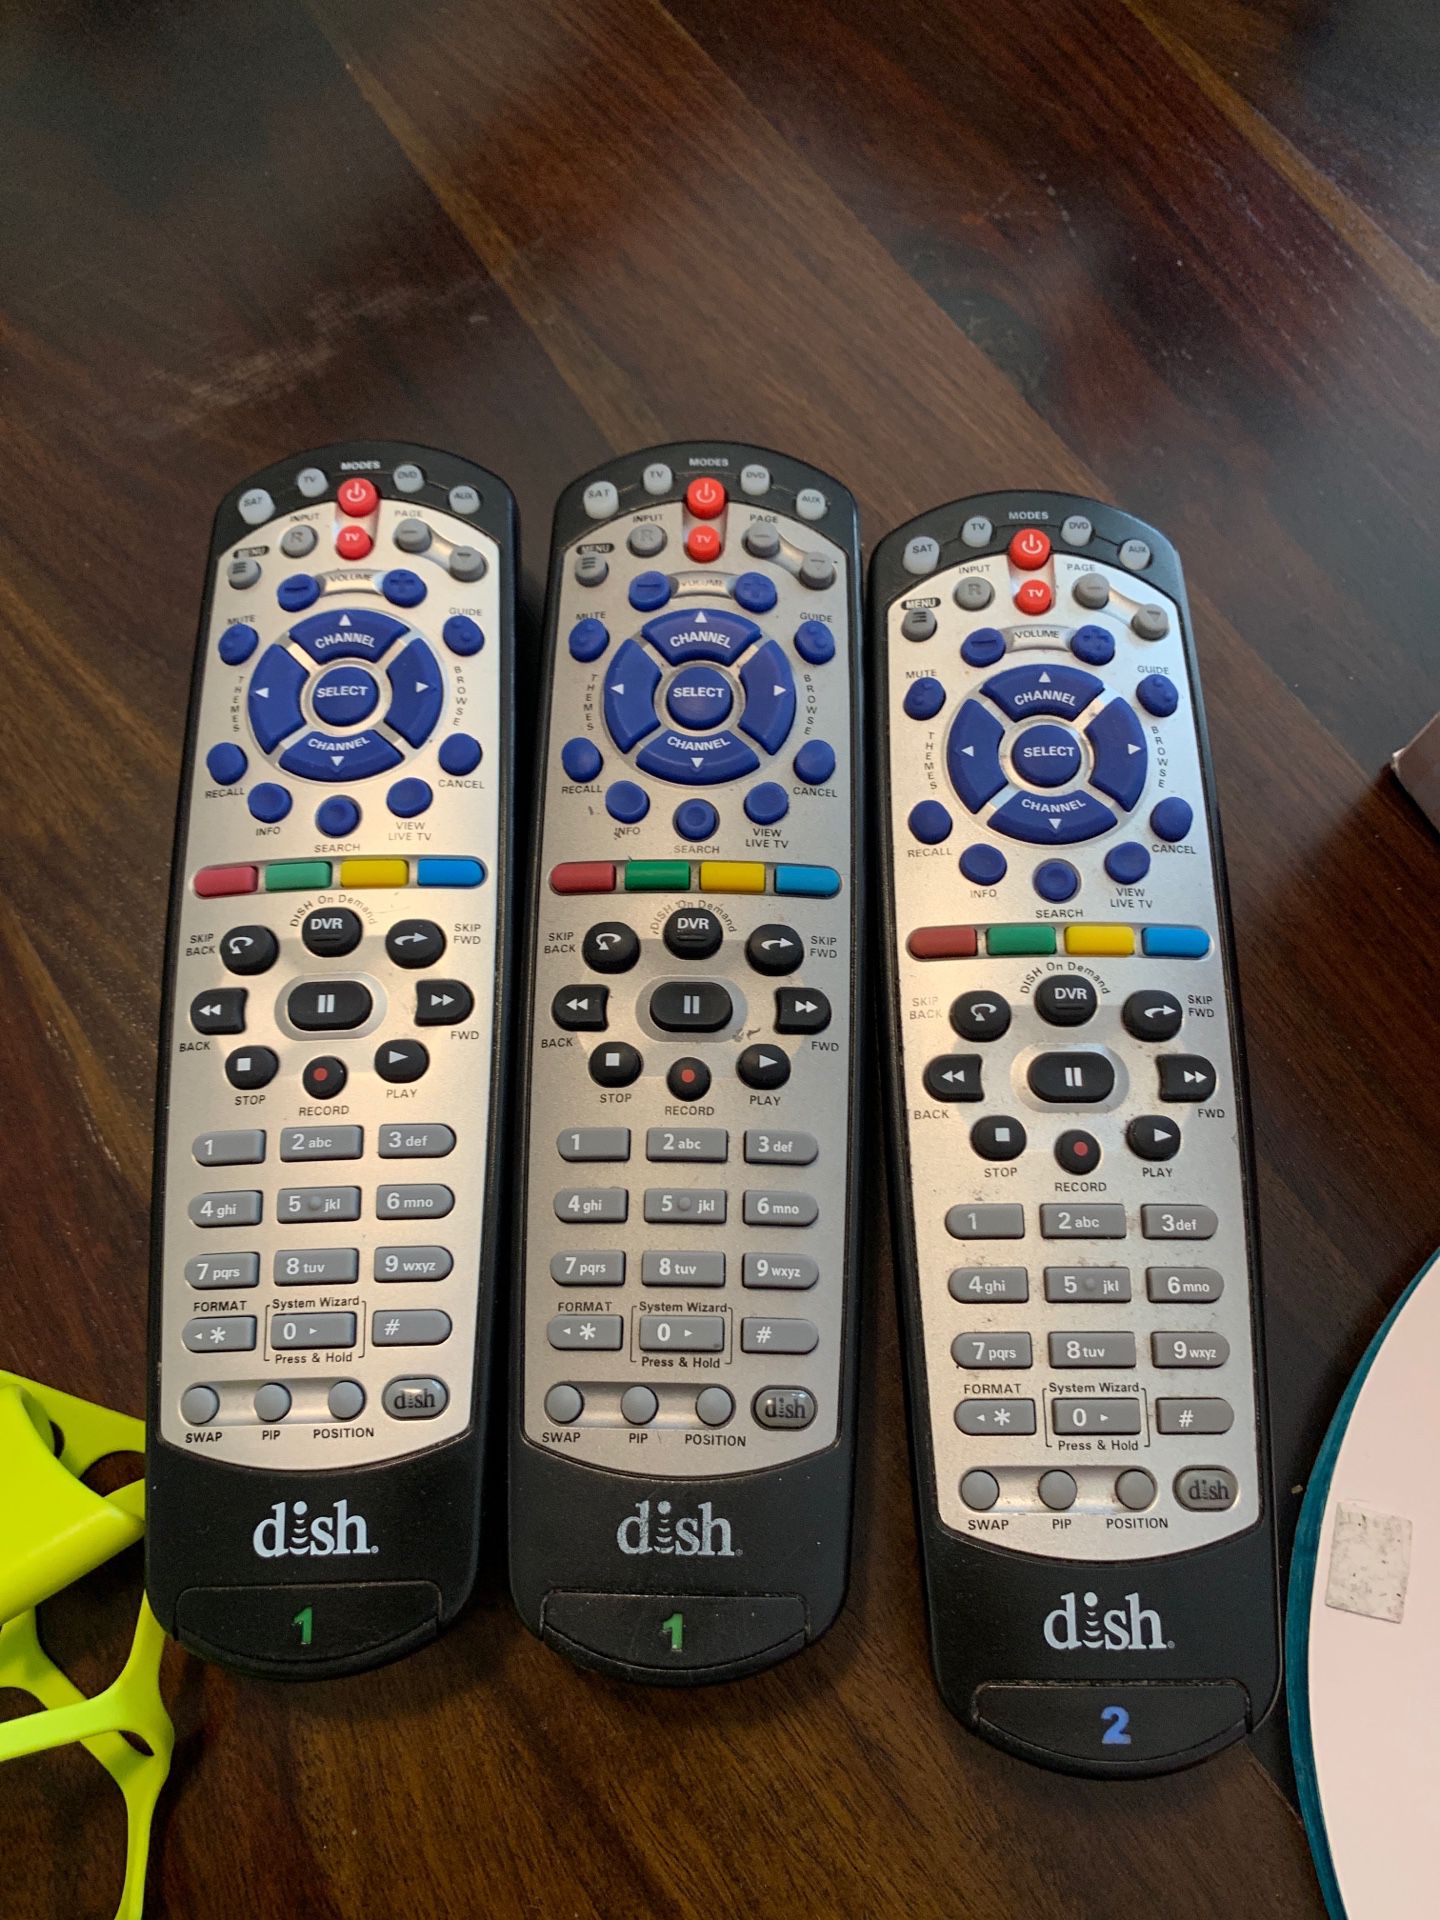 Dish Network Controls